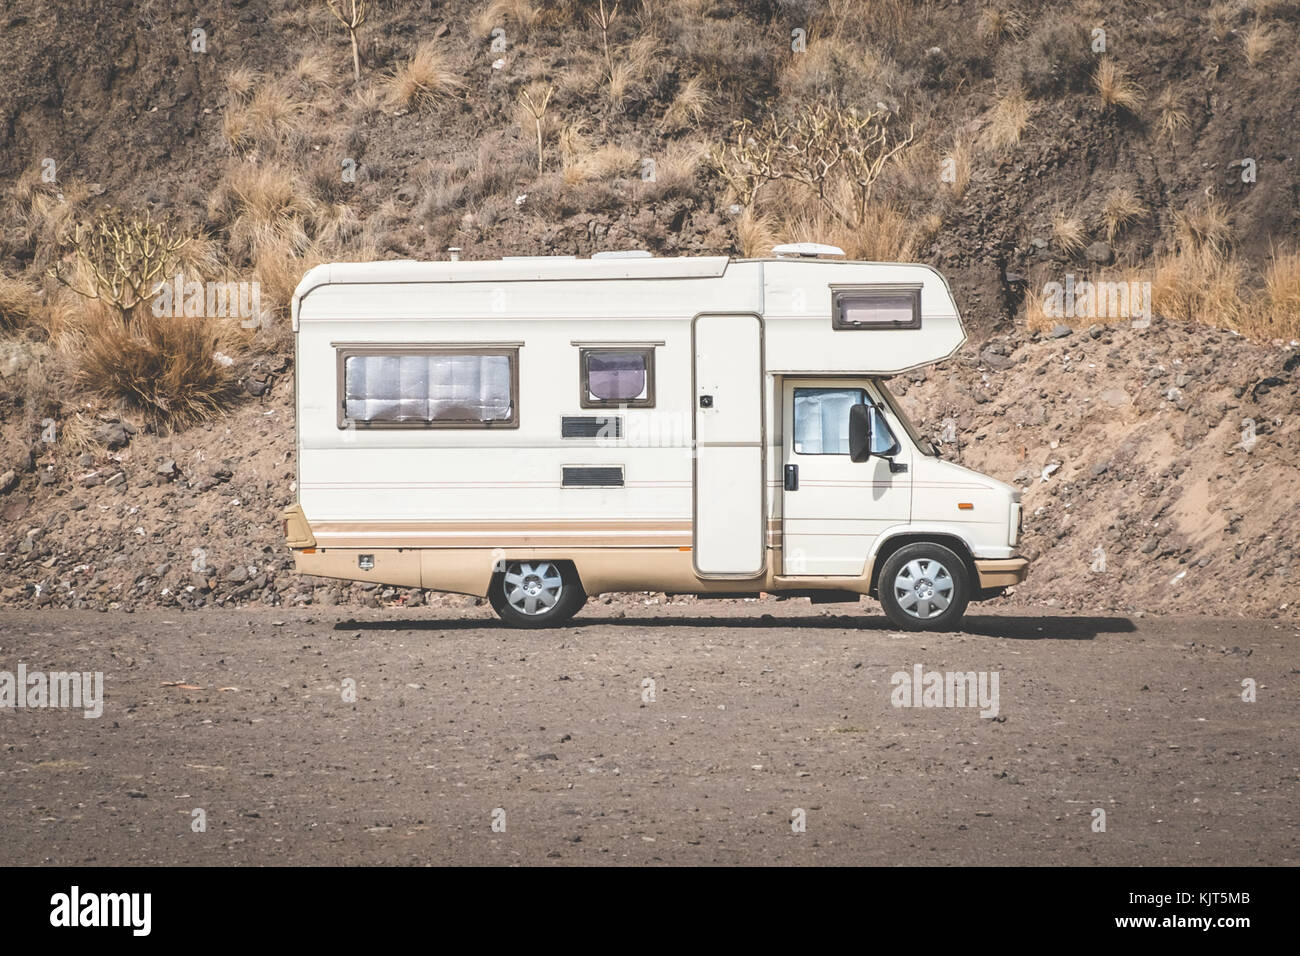 vintage camping bus, rv camper in desert landscape, Stock Photo